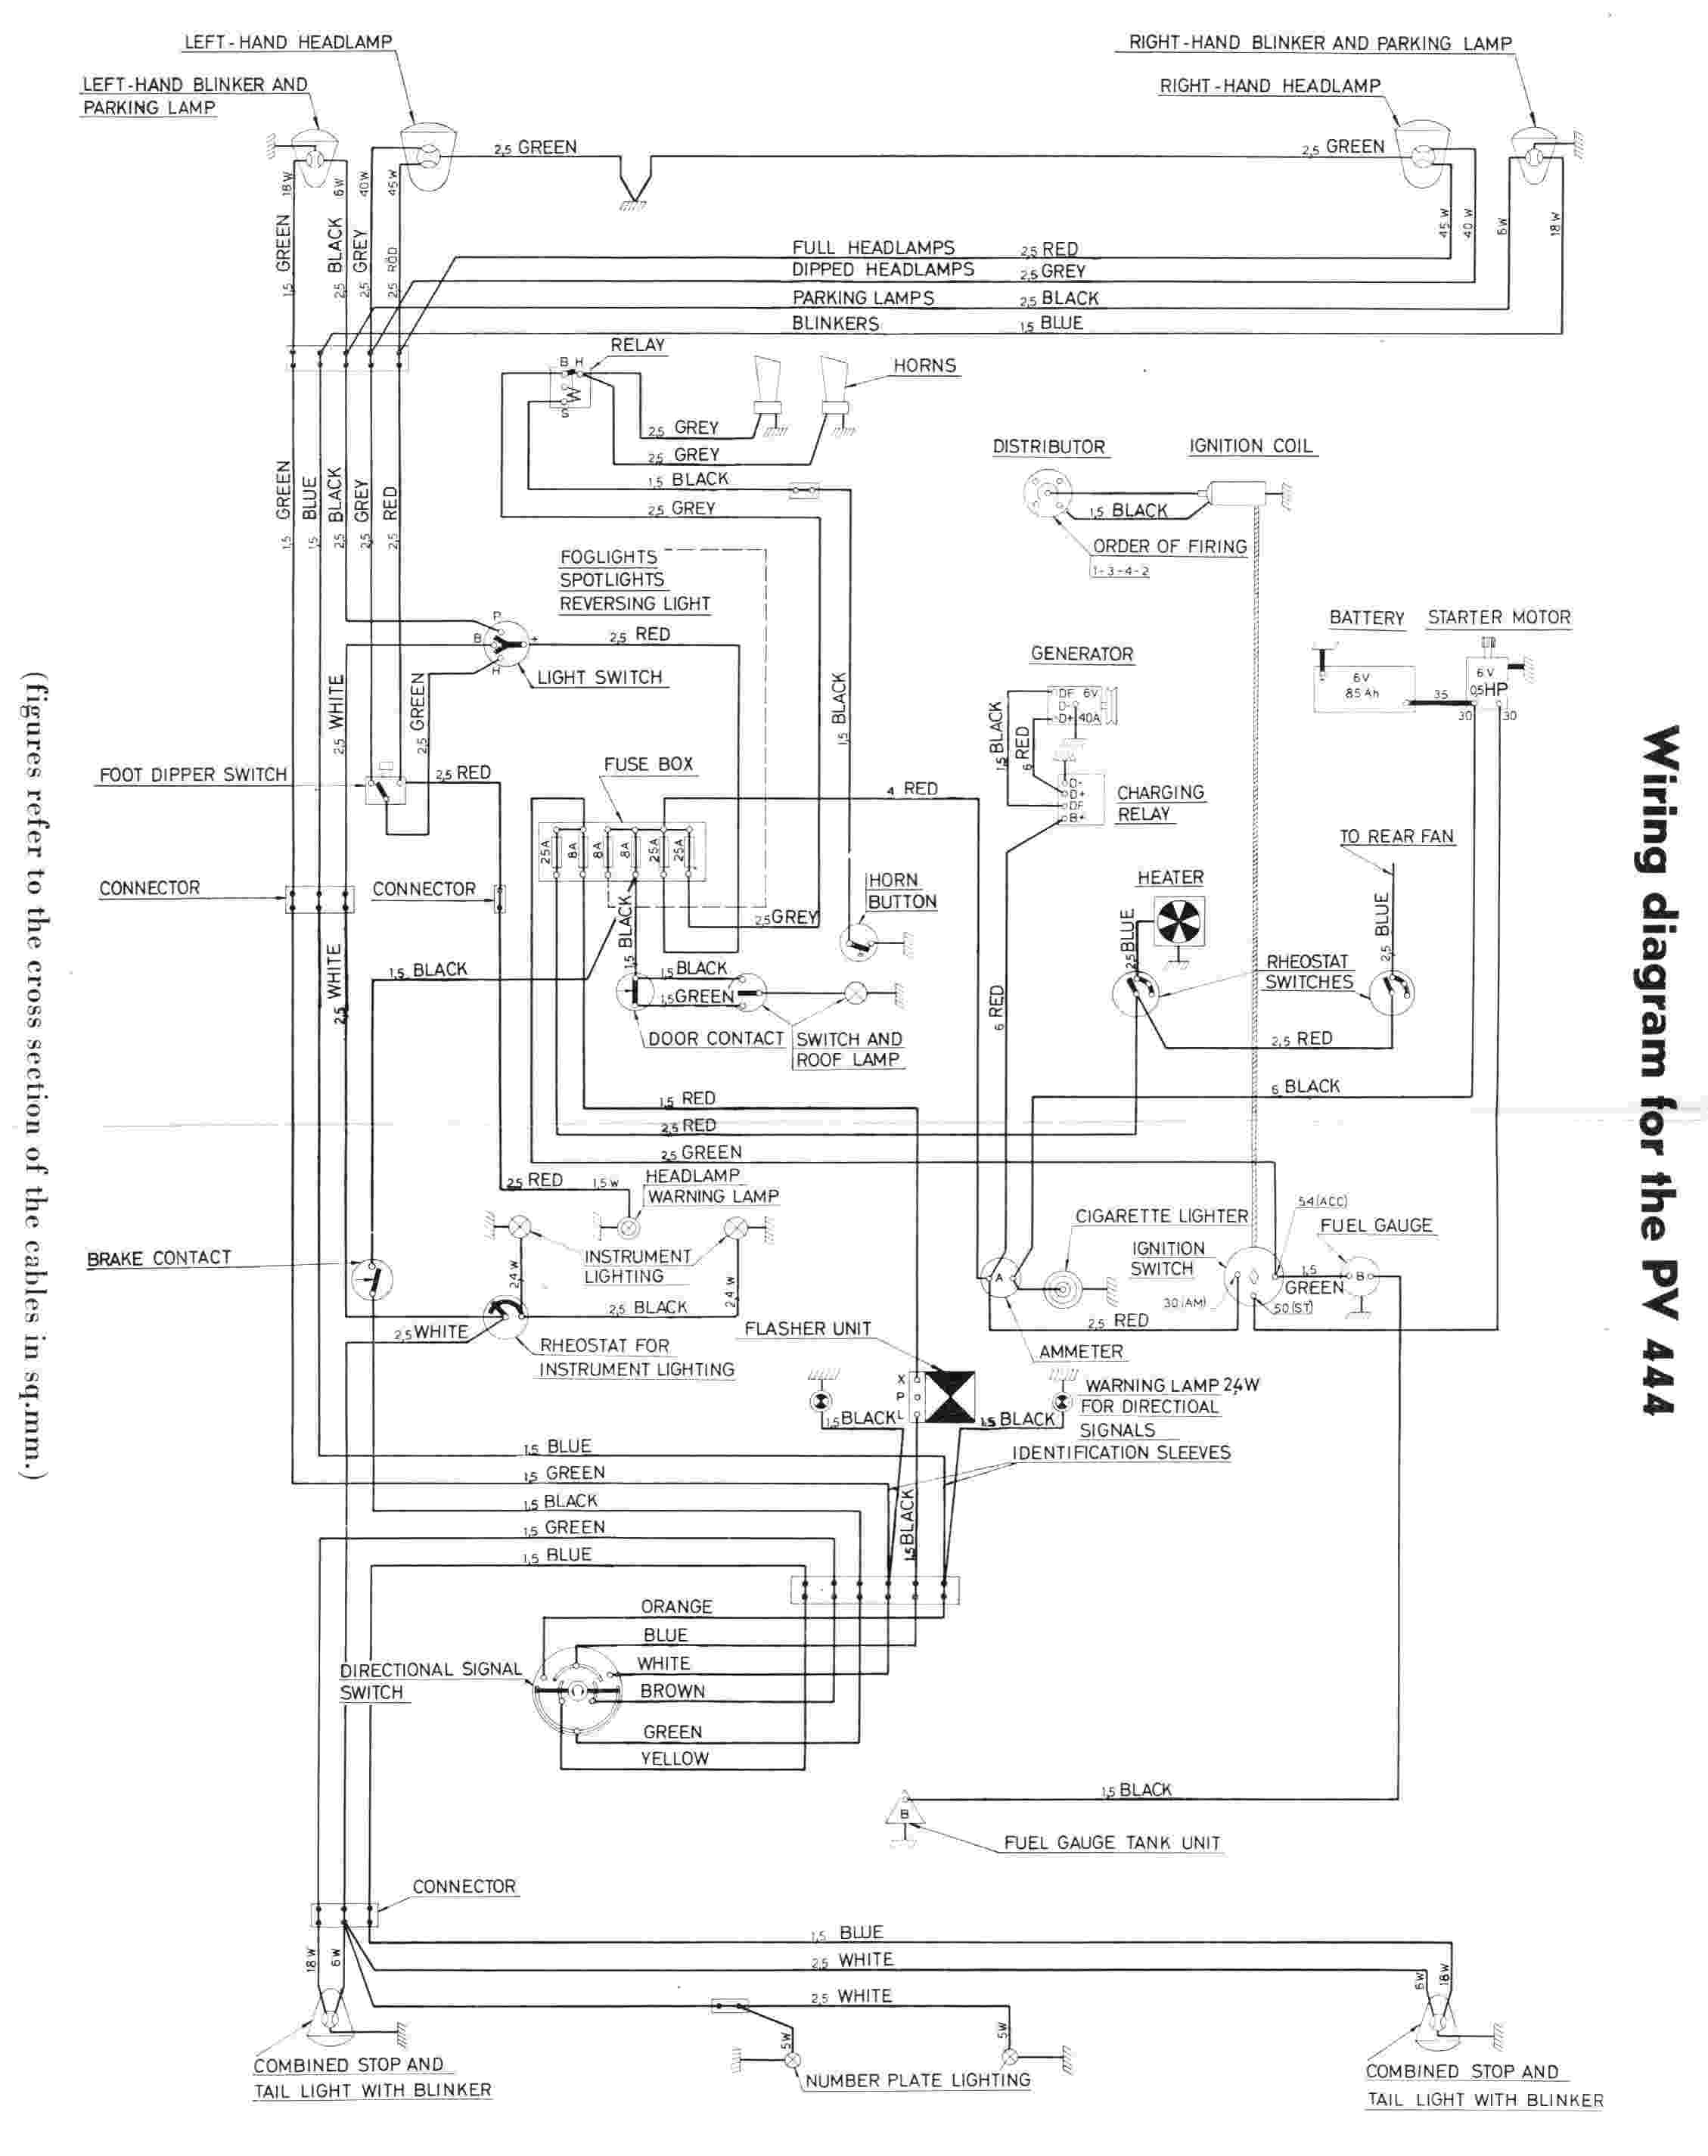 VOLVO - Car PDF Manual, Wiring Diagram & Fault Codes DTC  Volvo V70 T5 2002 Club Wiring Diagram    Car PDF Manual, Wiring Diagram & Fault Codes DTC